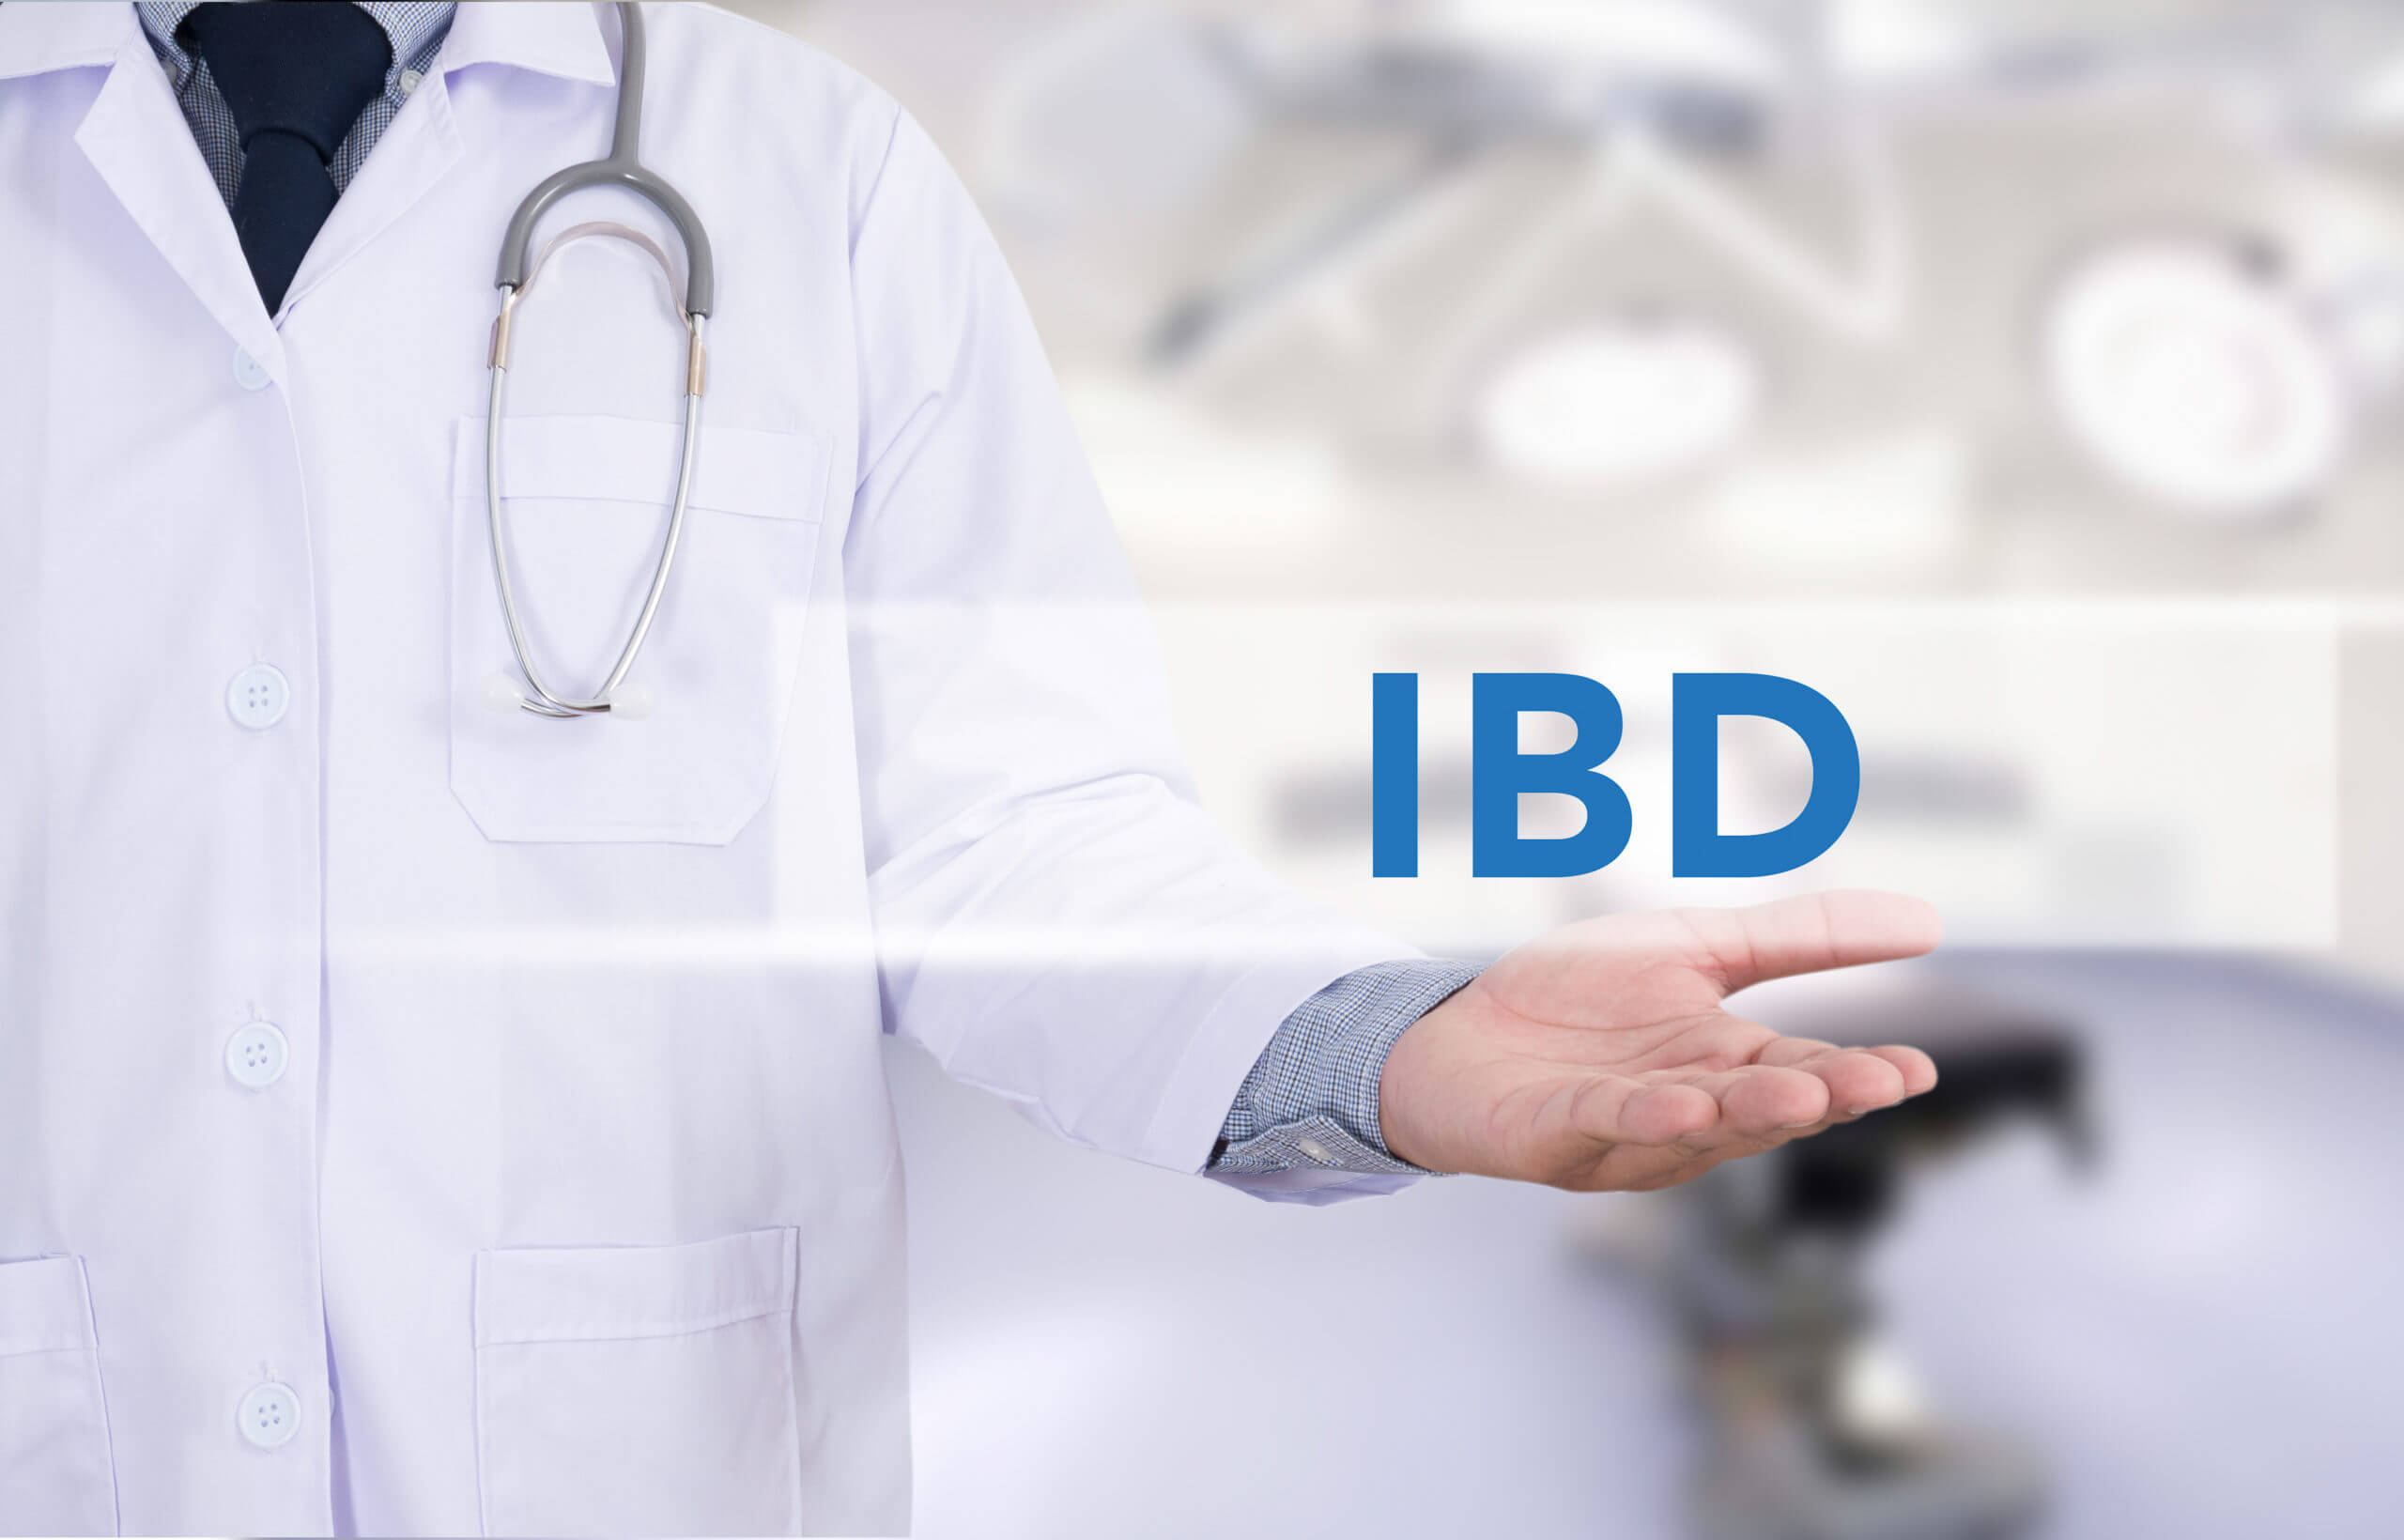 IBD - Inflammatory Bowel Disease